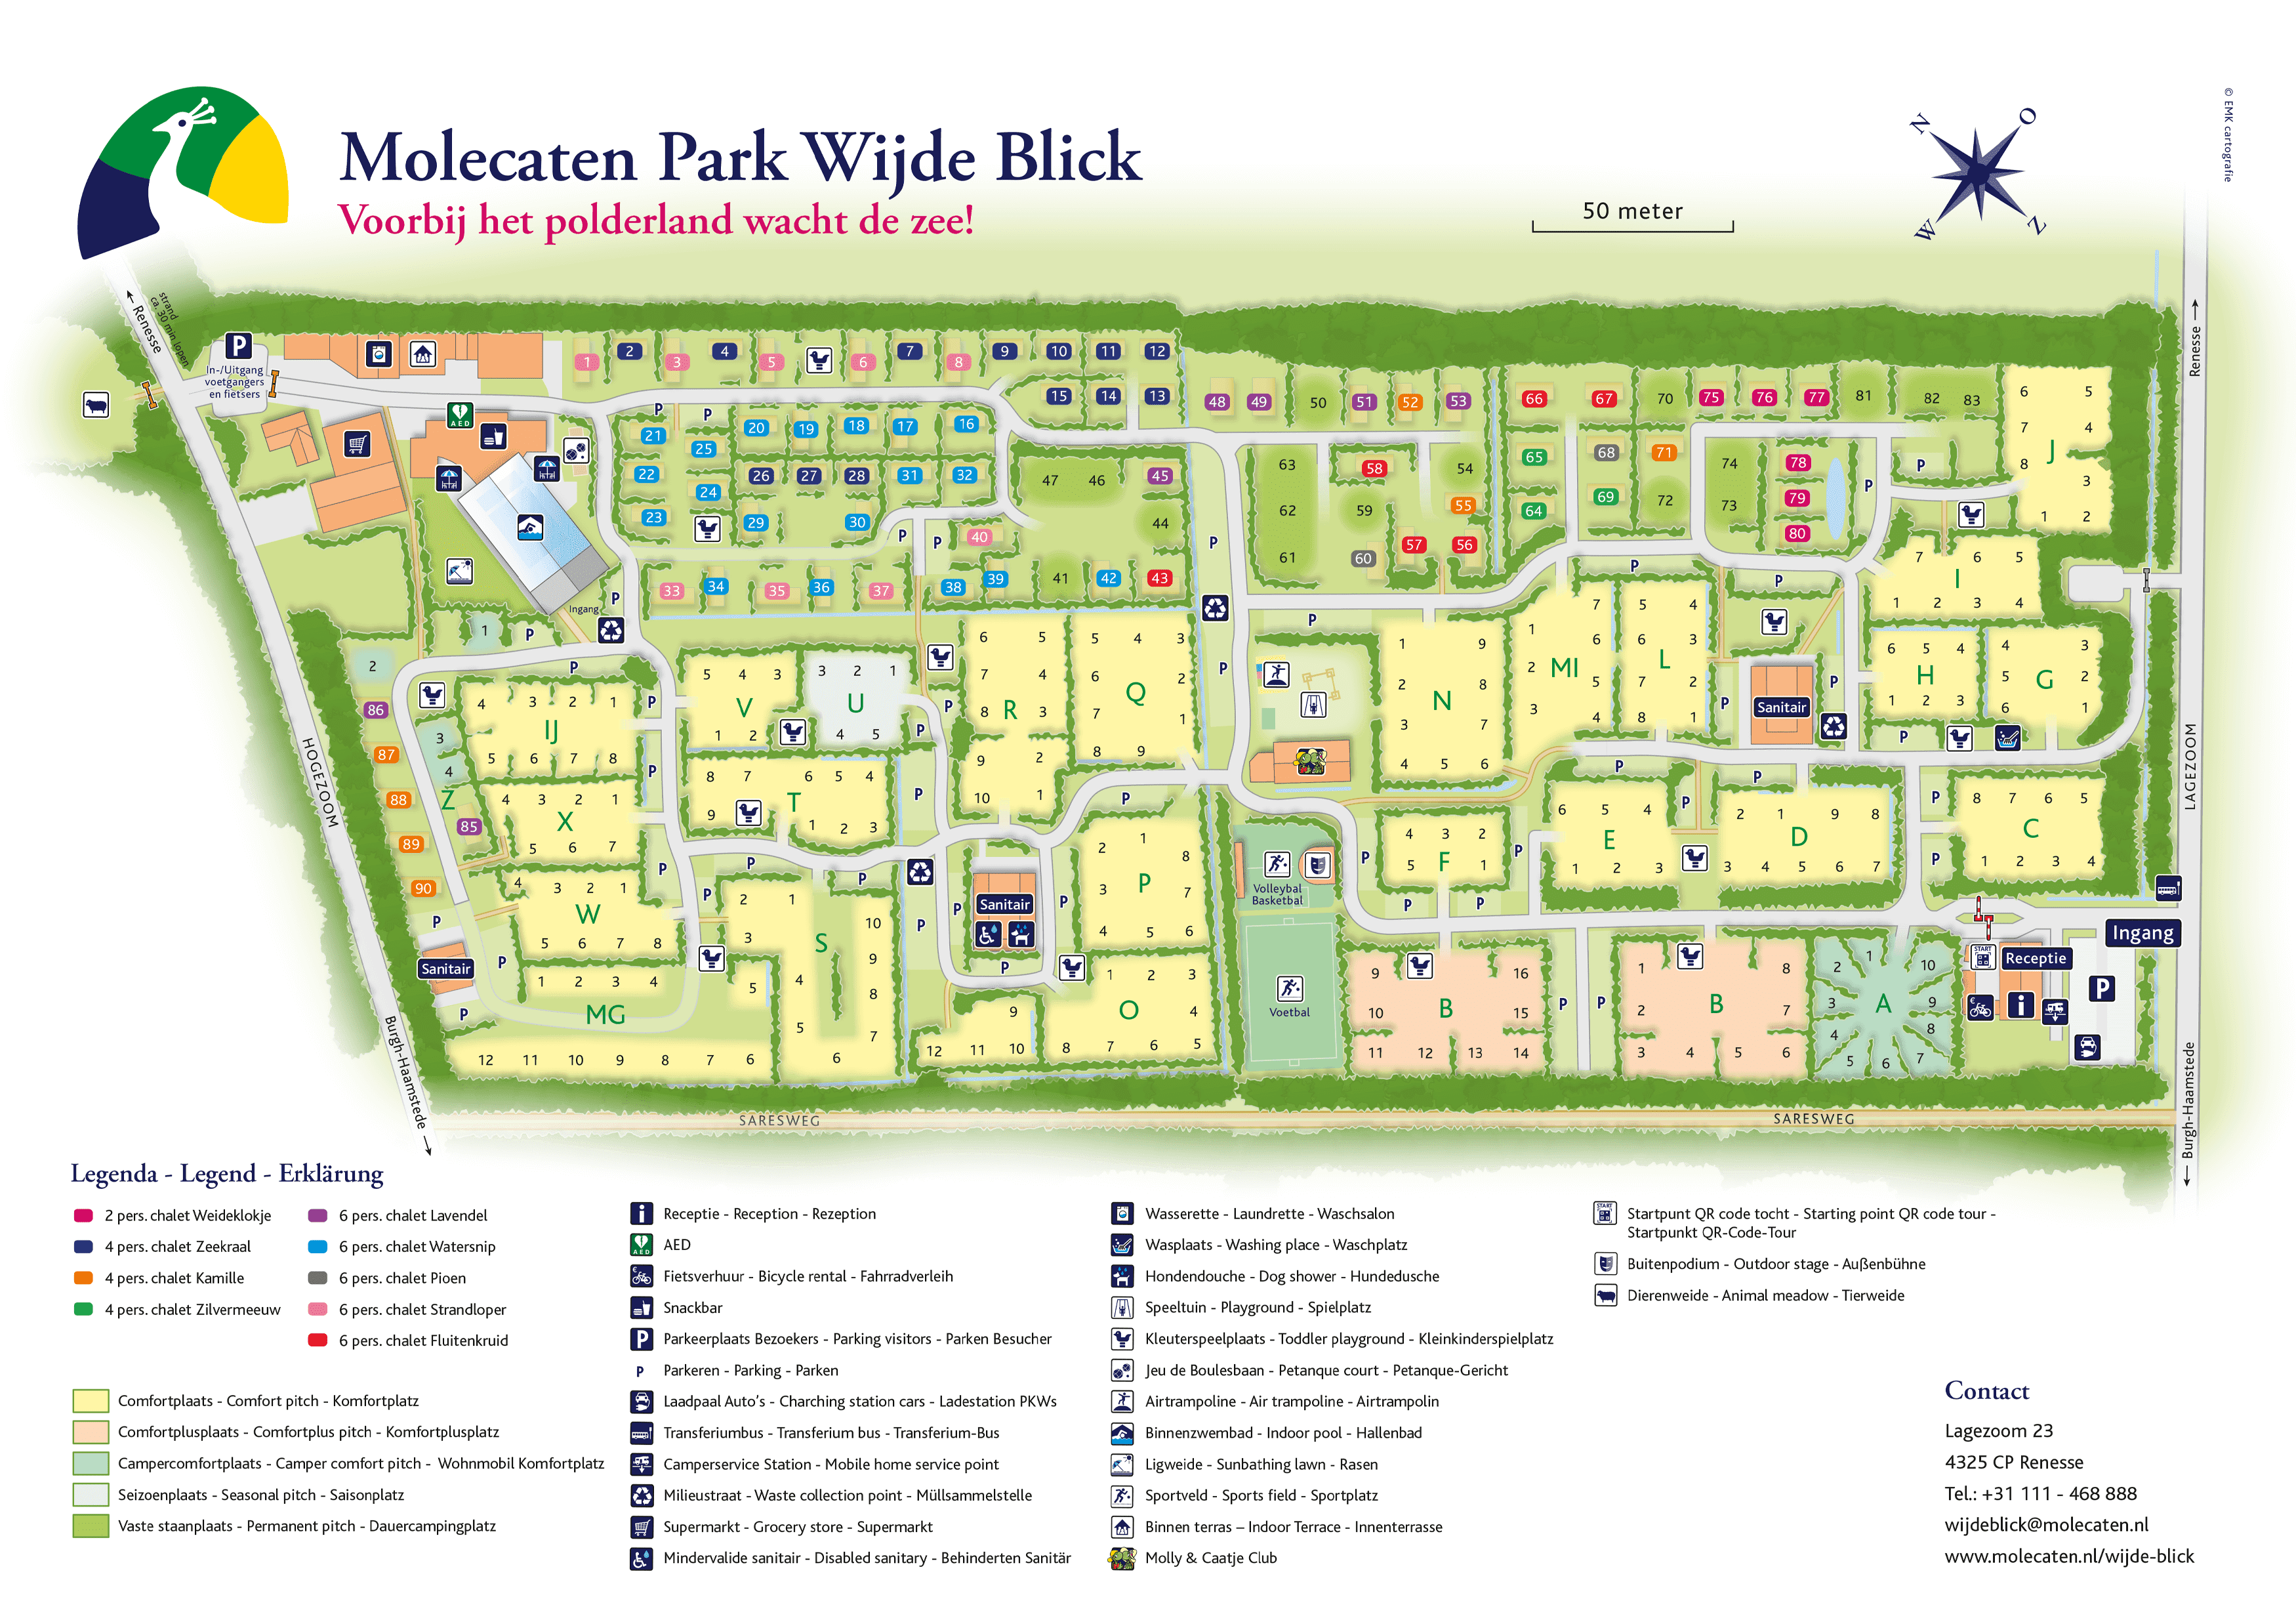 Molecaten Park Wijde Blick accommodation.parkmap.alttext